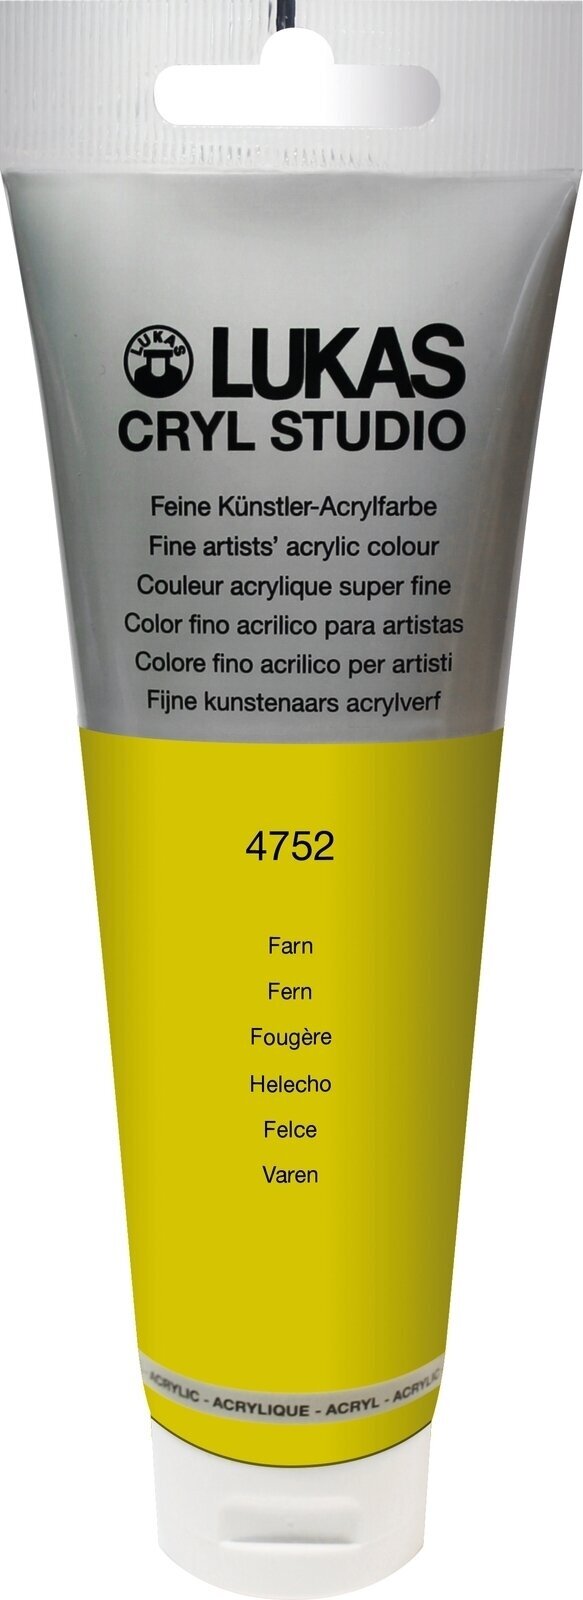 Akrylová farba Lukas Cryl Studio Acrylic Paint Plastic Tube Akrylová farba Fern 125 ml 1 ks